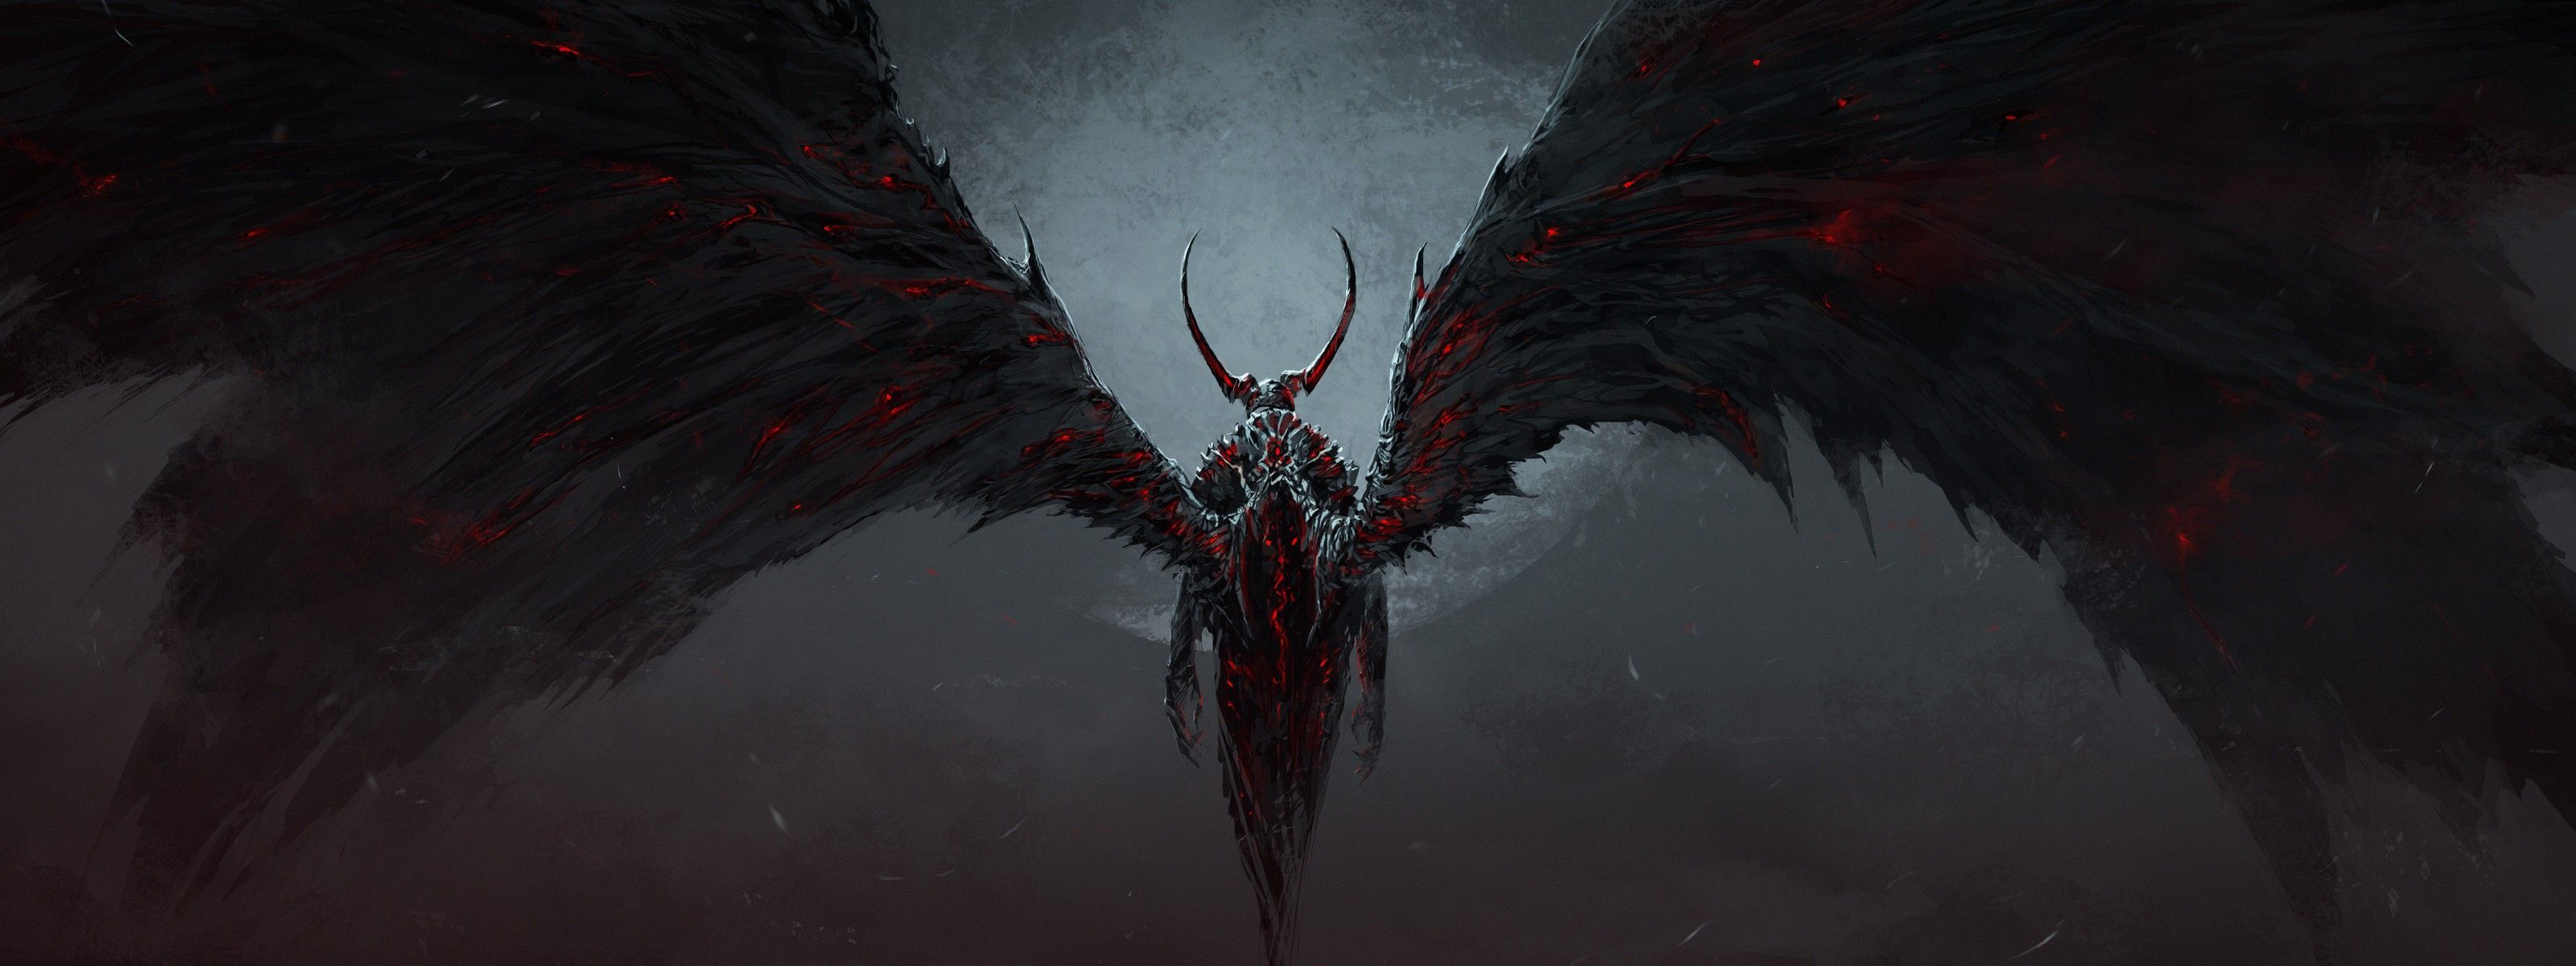 Devil wings 1080P, 2K, 4K, 5K HD wallpapers free download